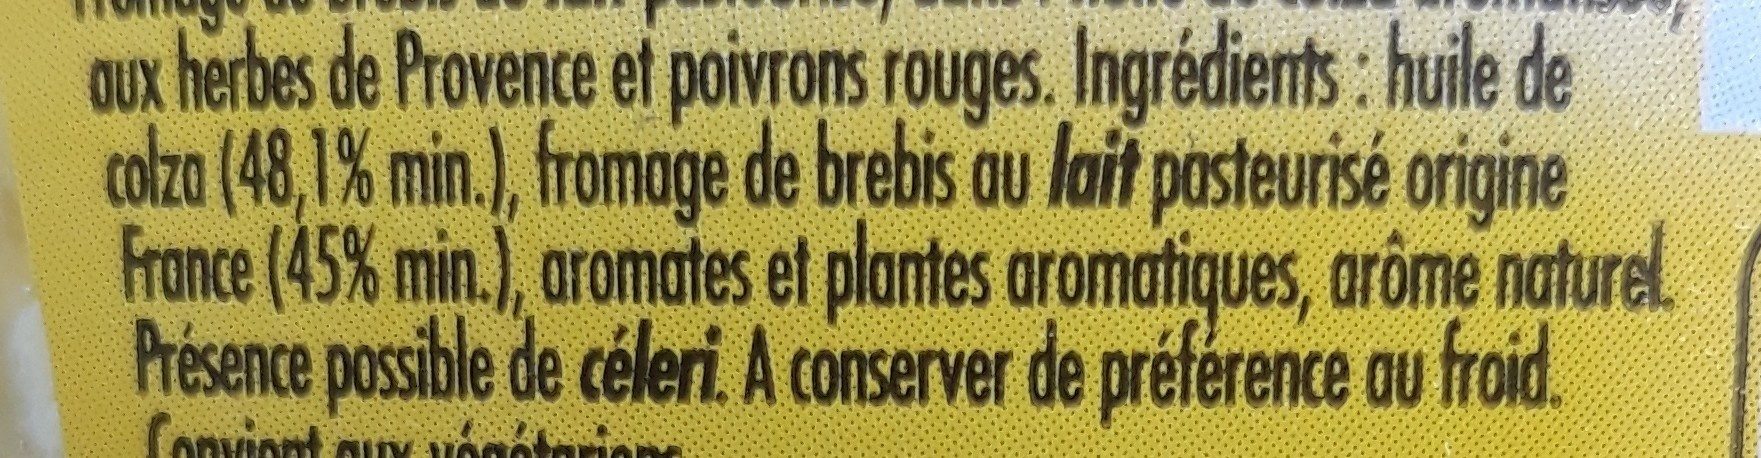 Salakis Herbes de Provence - Ingrediënten - fr